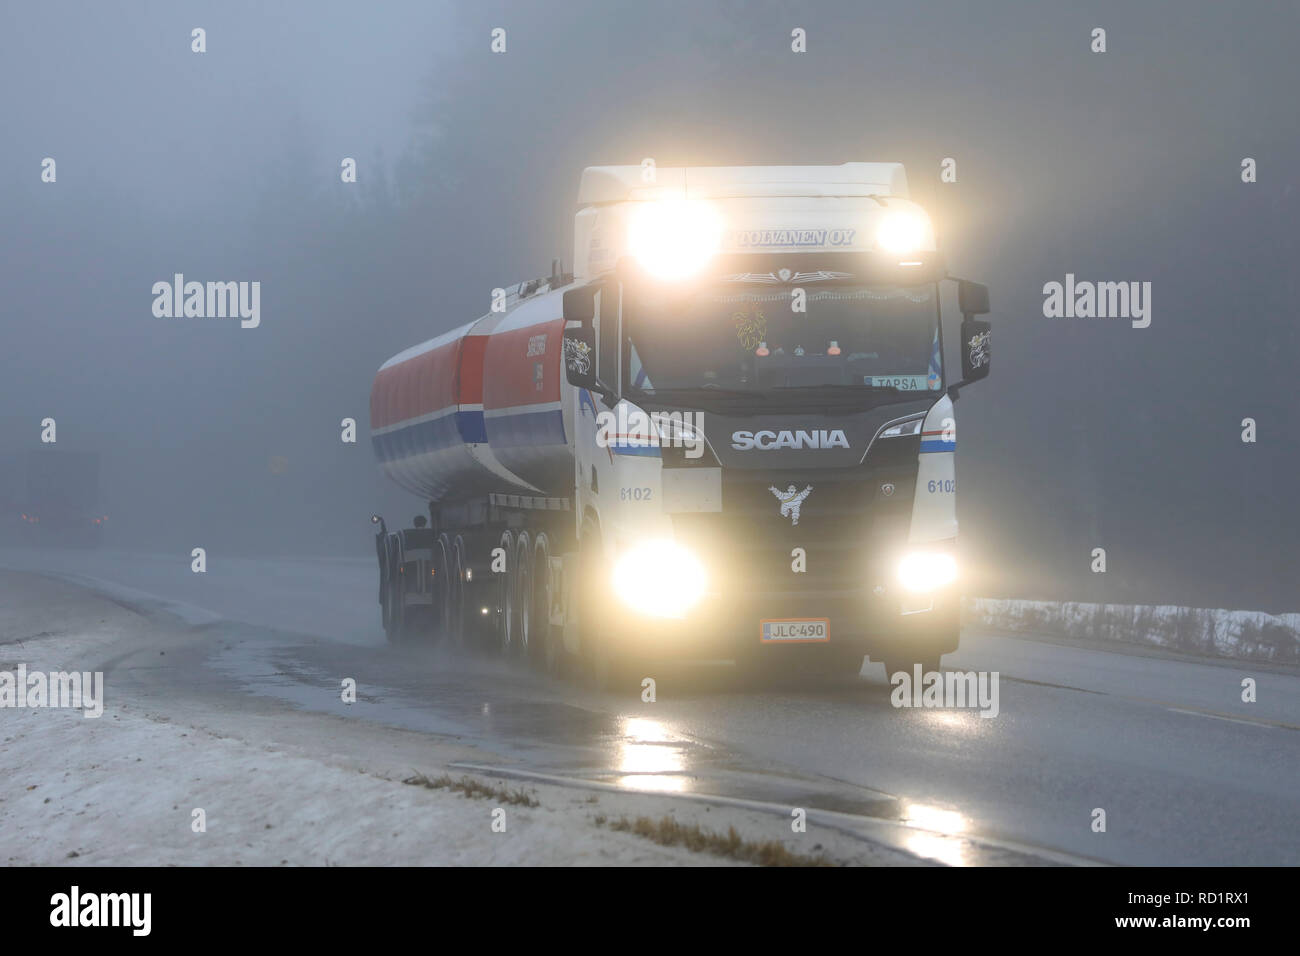 Salo, Finland - December 28, 2018: Bright headlights of Next Generation Scania R520 tank truck of MM Tolvanen through thick fog on winter highway. Stock Photo